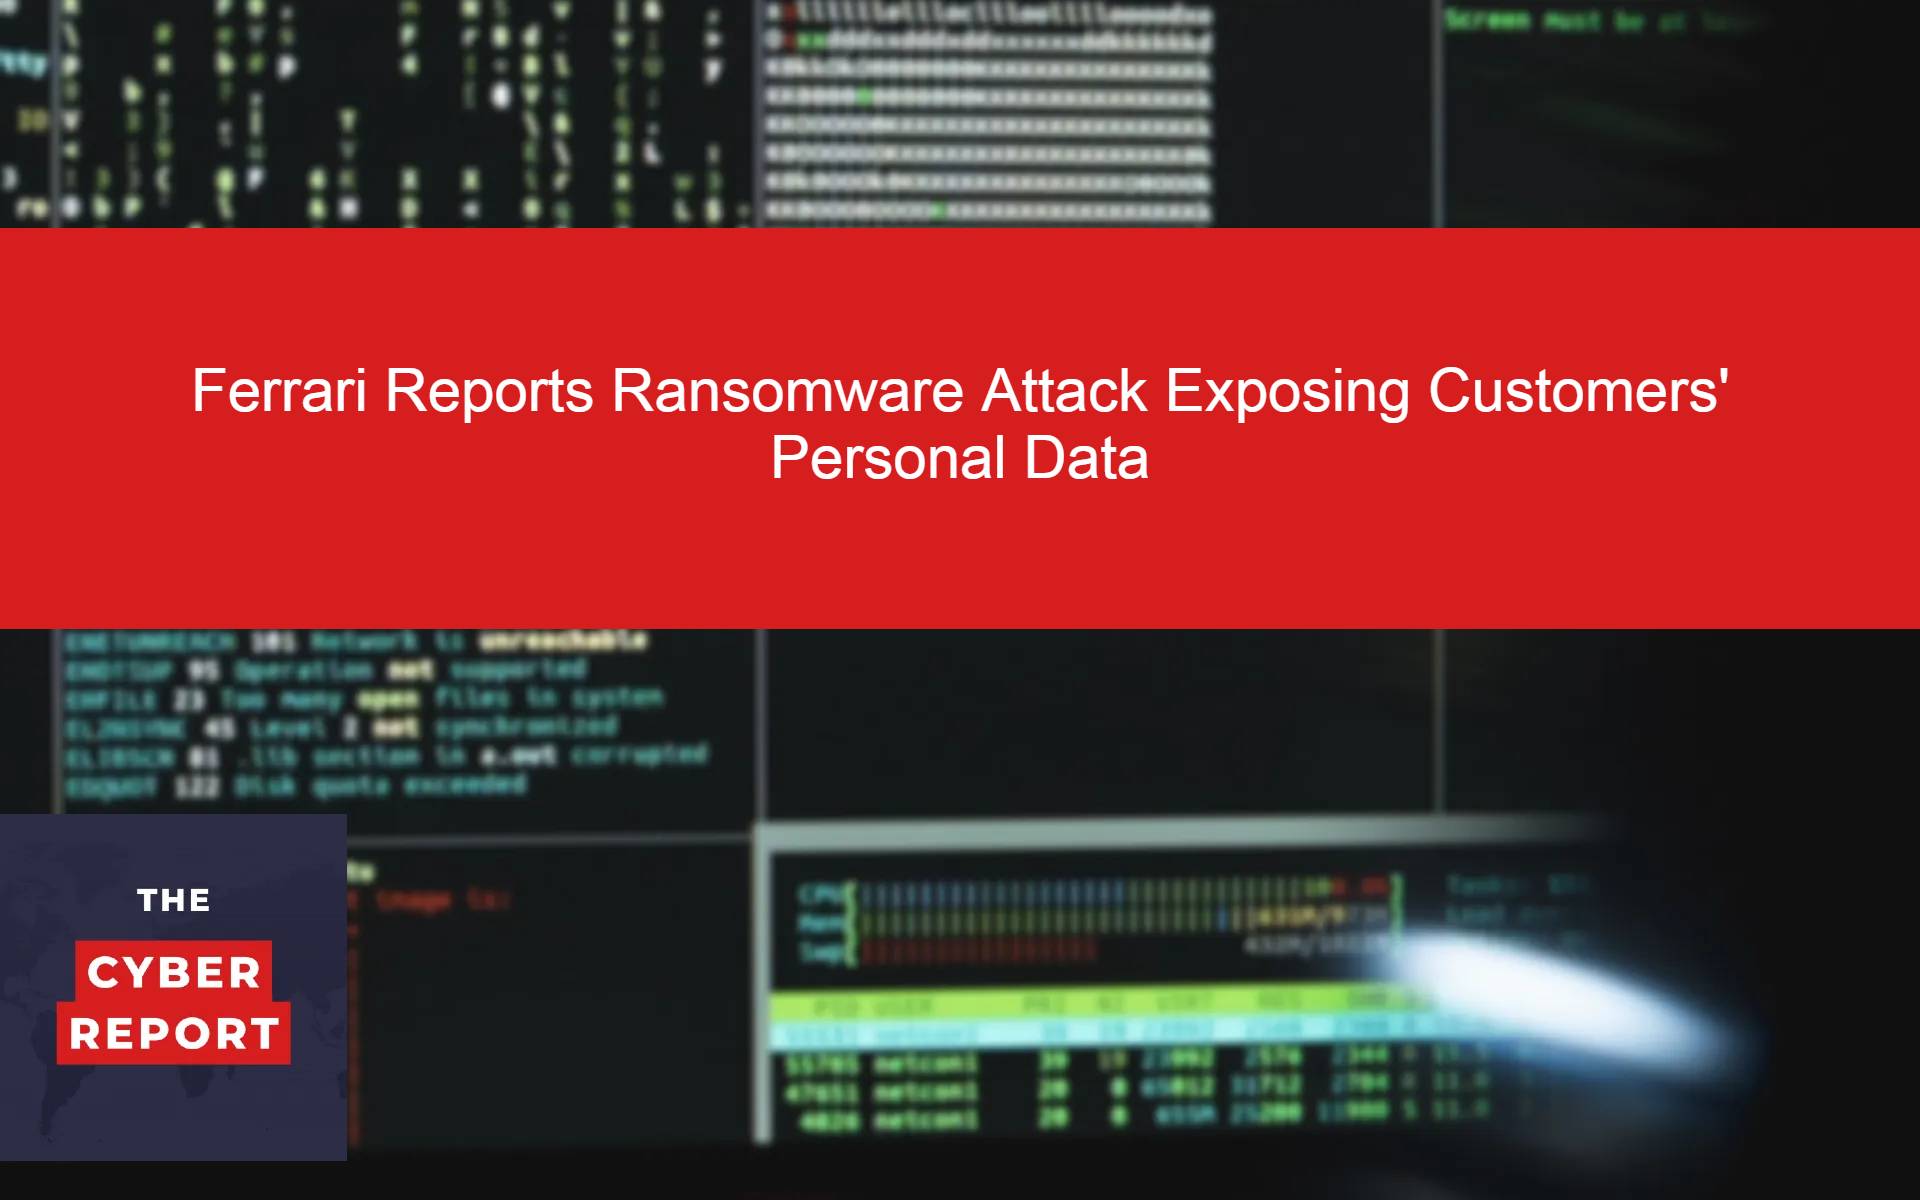 Ferrari Reports Ransomware Attack Exposing Customers' Personal Data